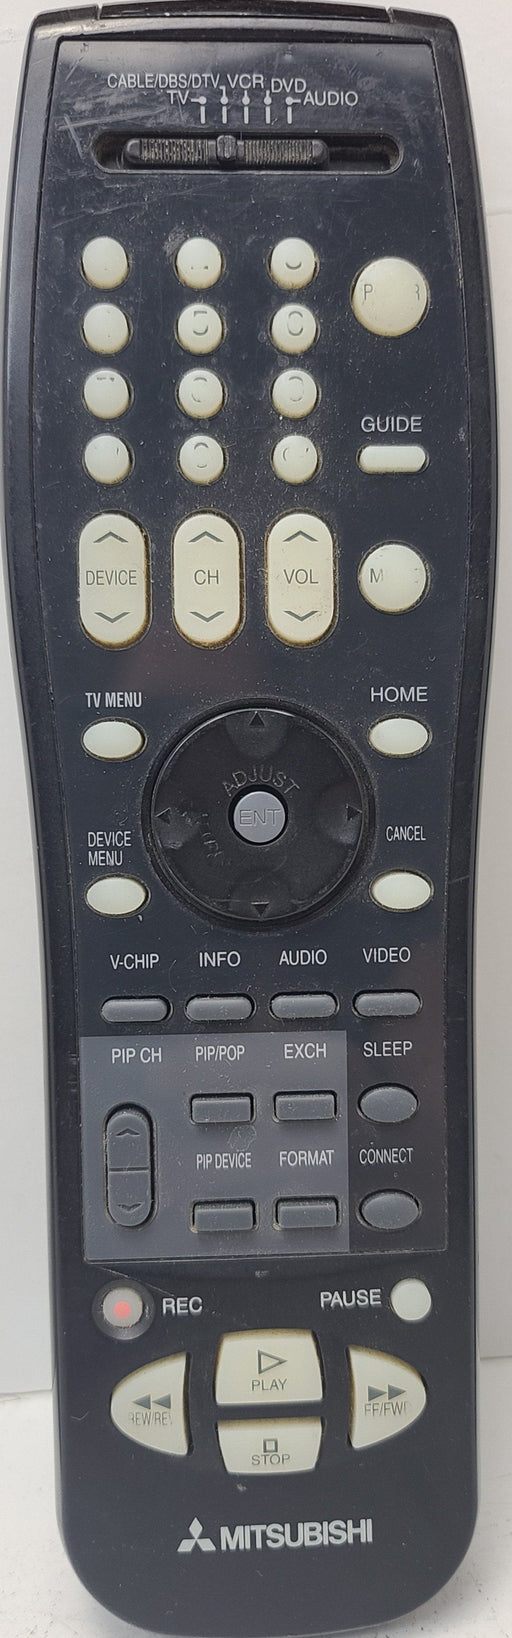 MITSUBISHI EUR7616Z2B Audio TV VCR DVD Remote Control For WT42413-Remote-SpenCertified-refurbished-vintage-electonics